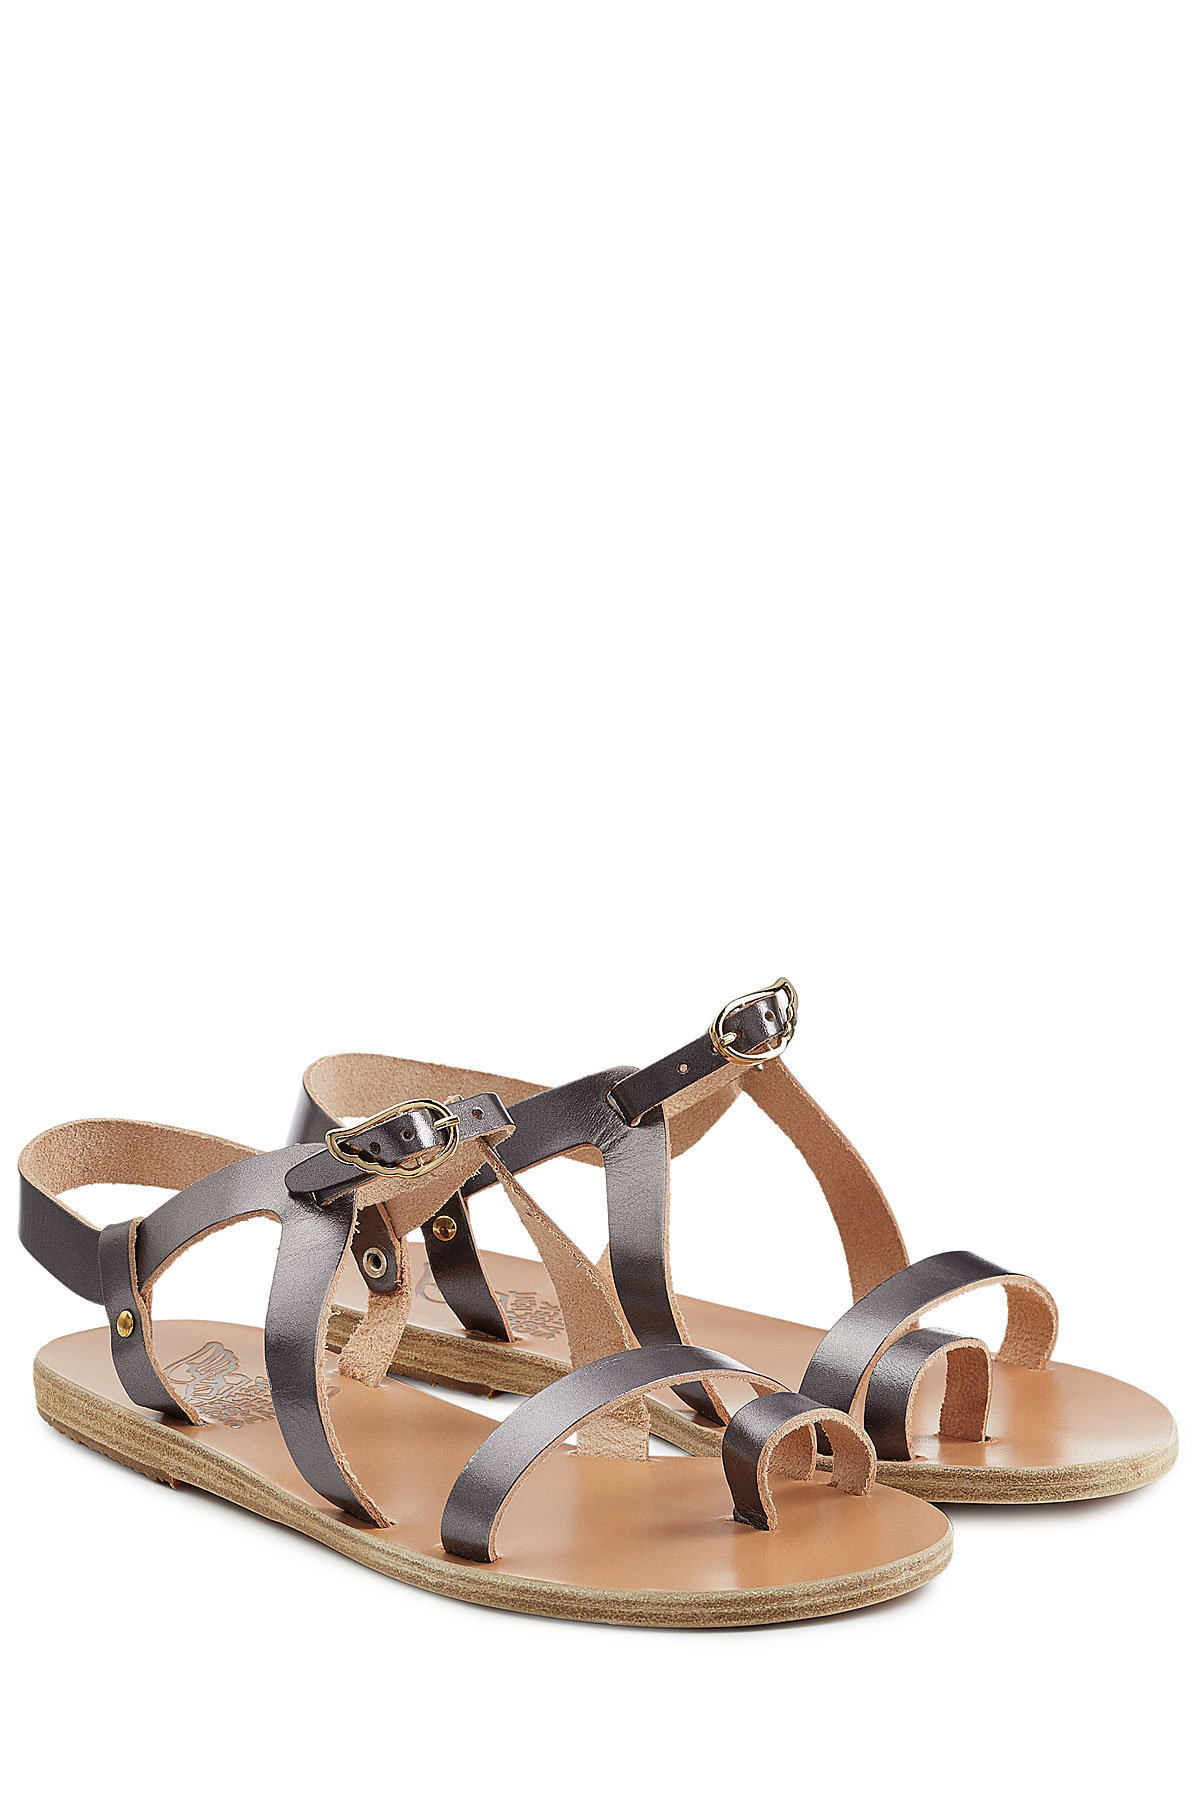 Ancient Greek Sandals - Flat Leather Phoebe Sandals